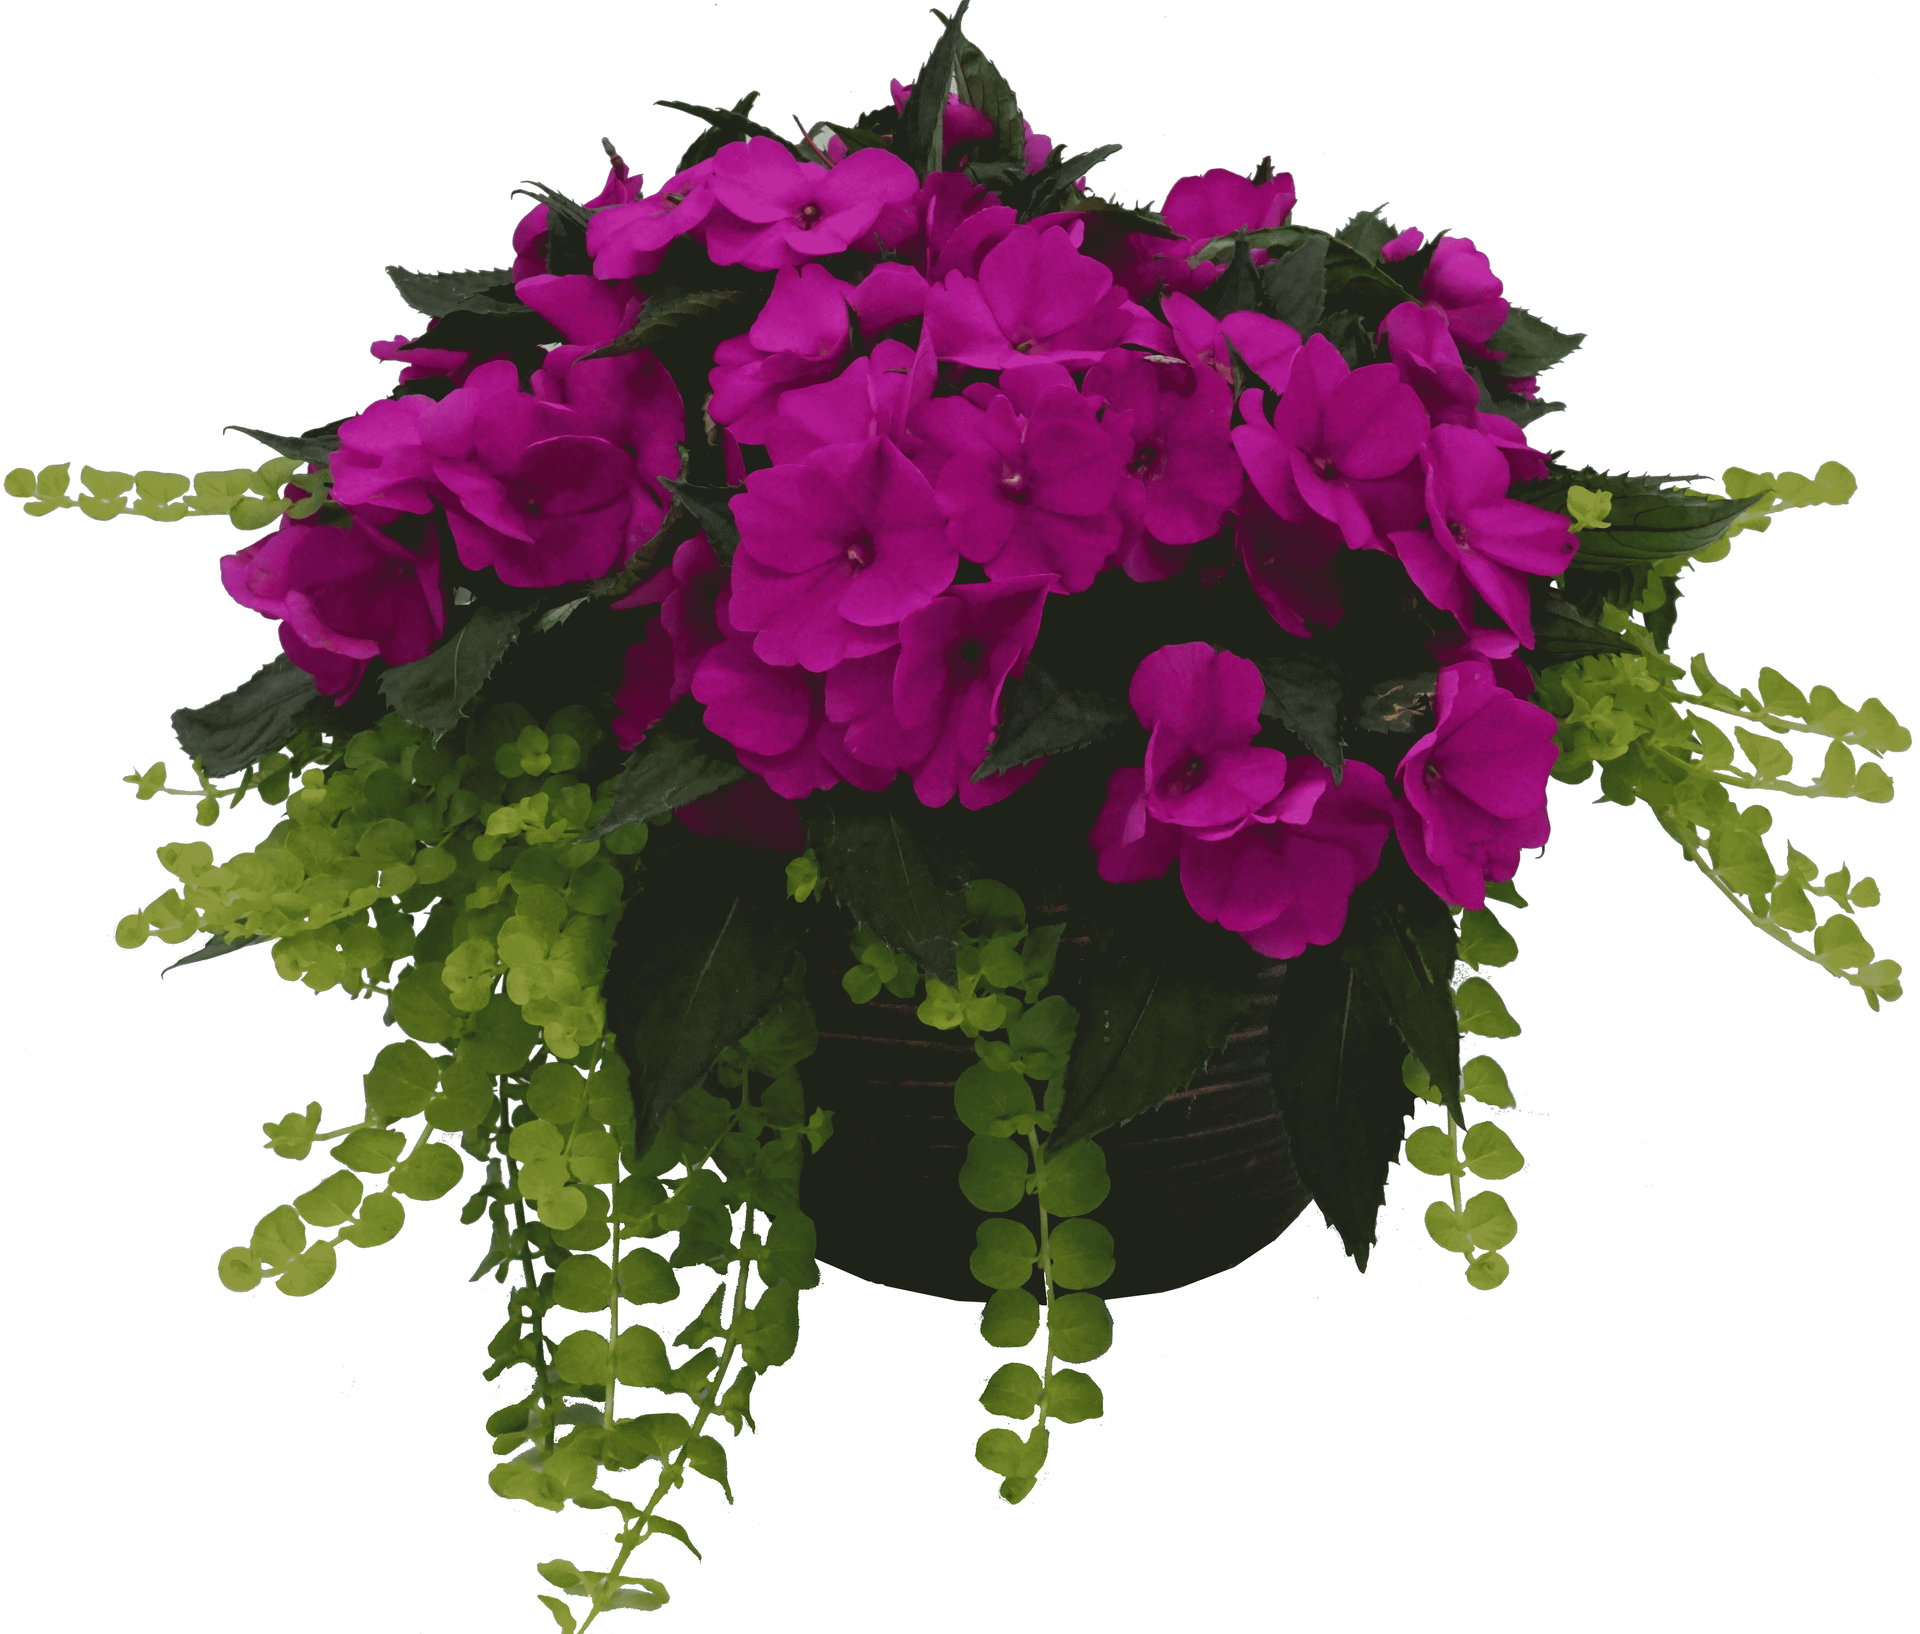 Purple Impatiens Sunpatiens Hanging Basket flowers for sale in Lebanon PA